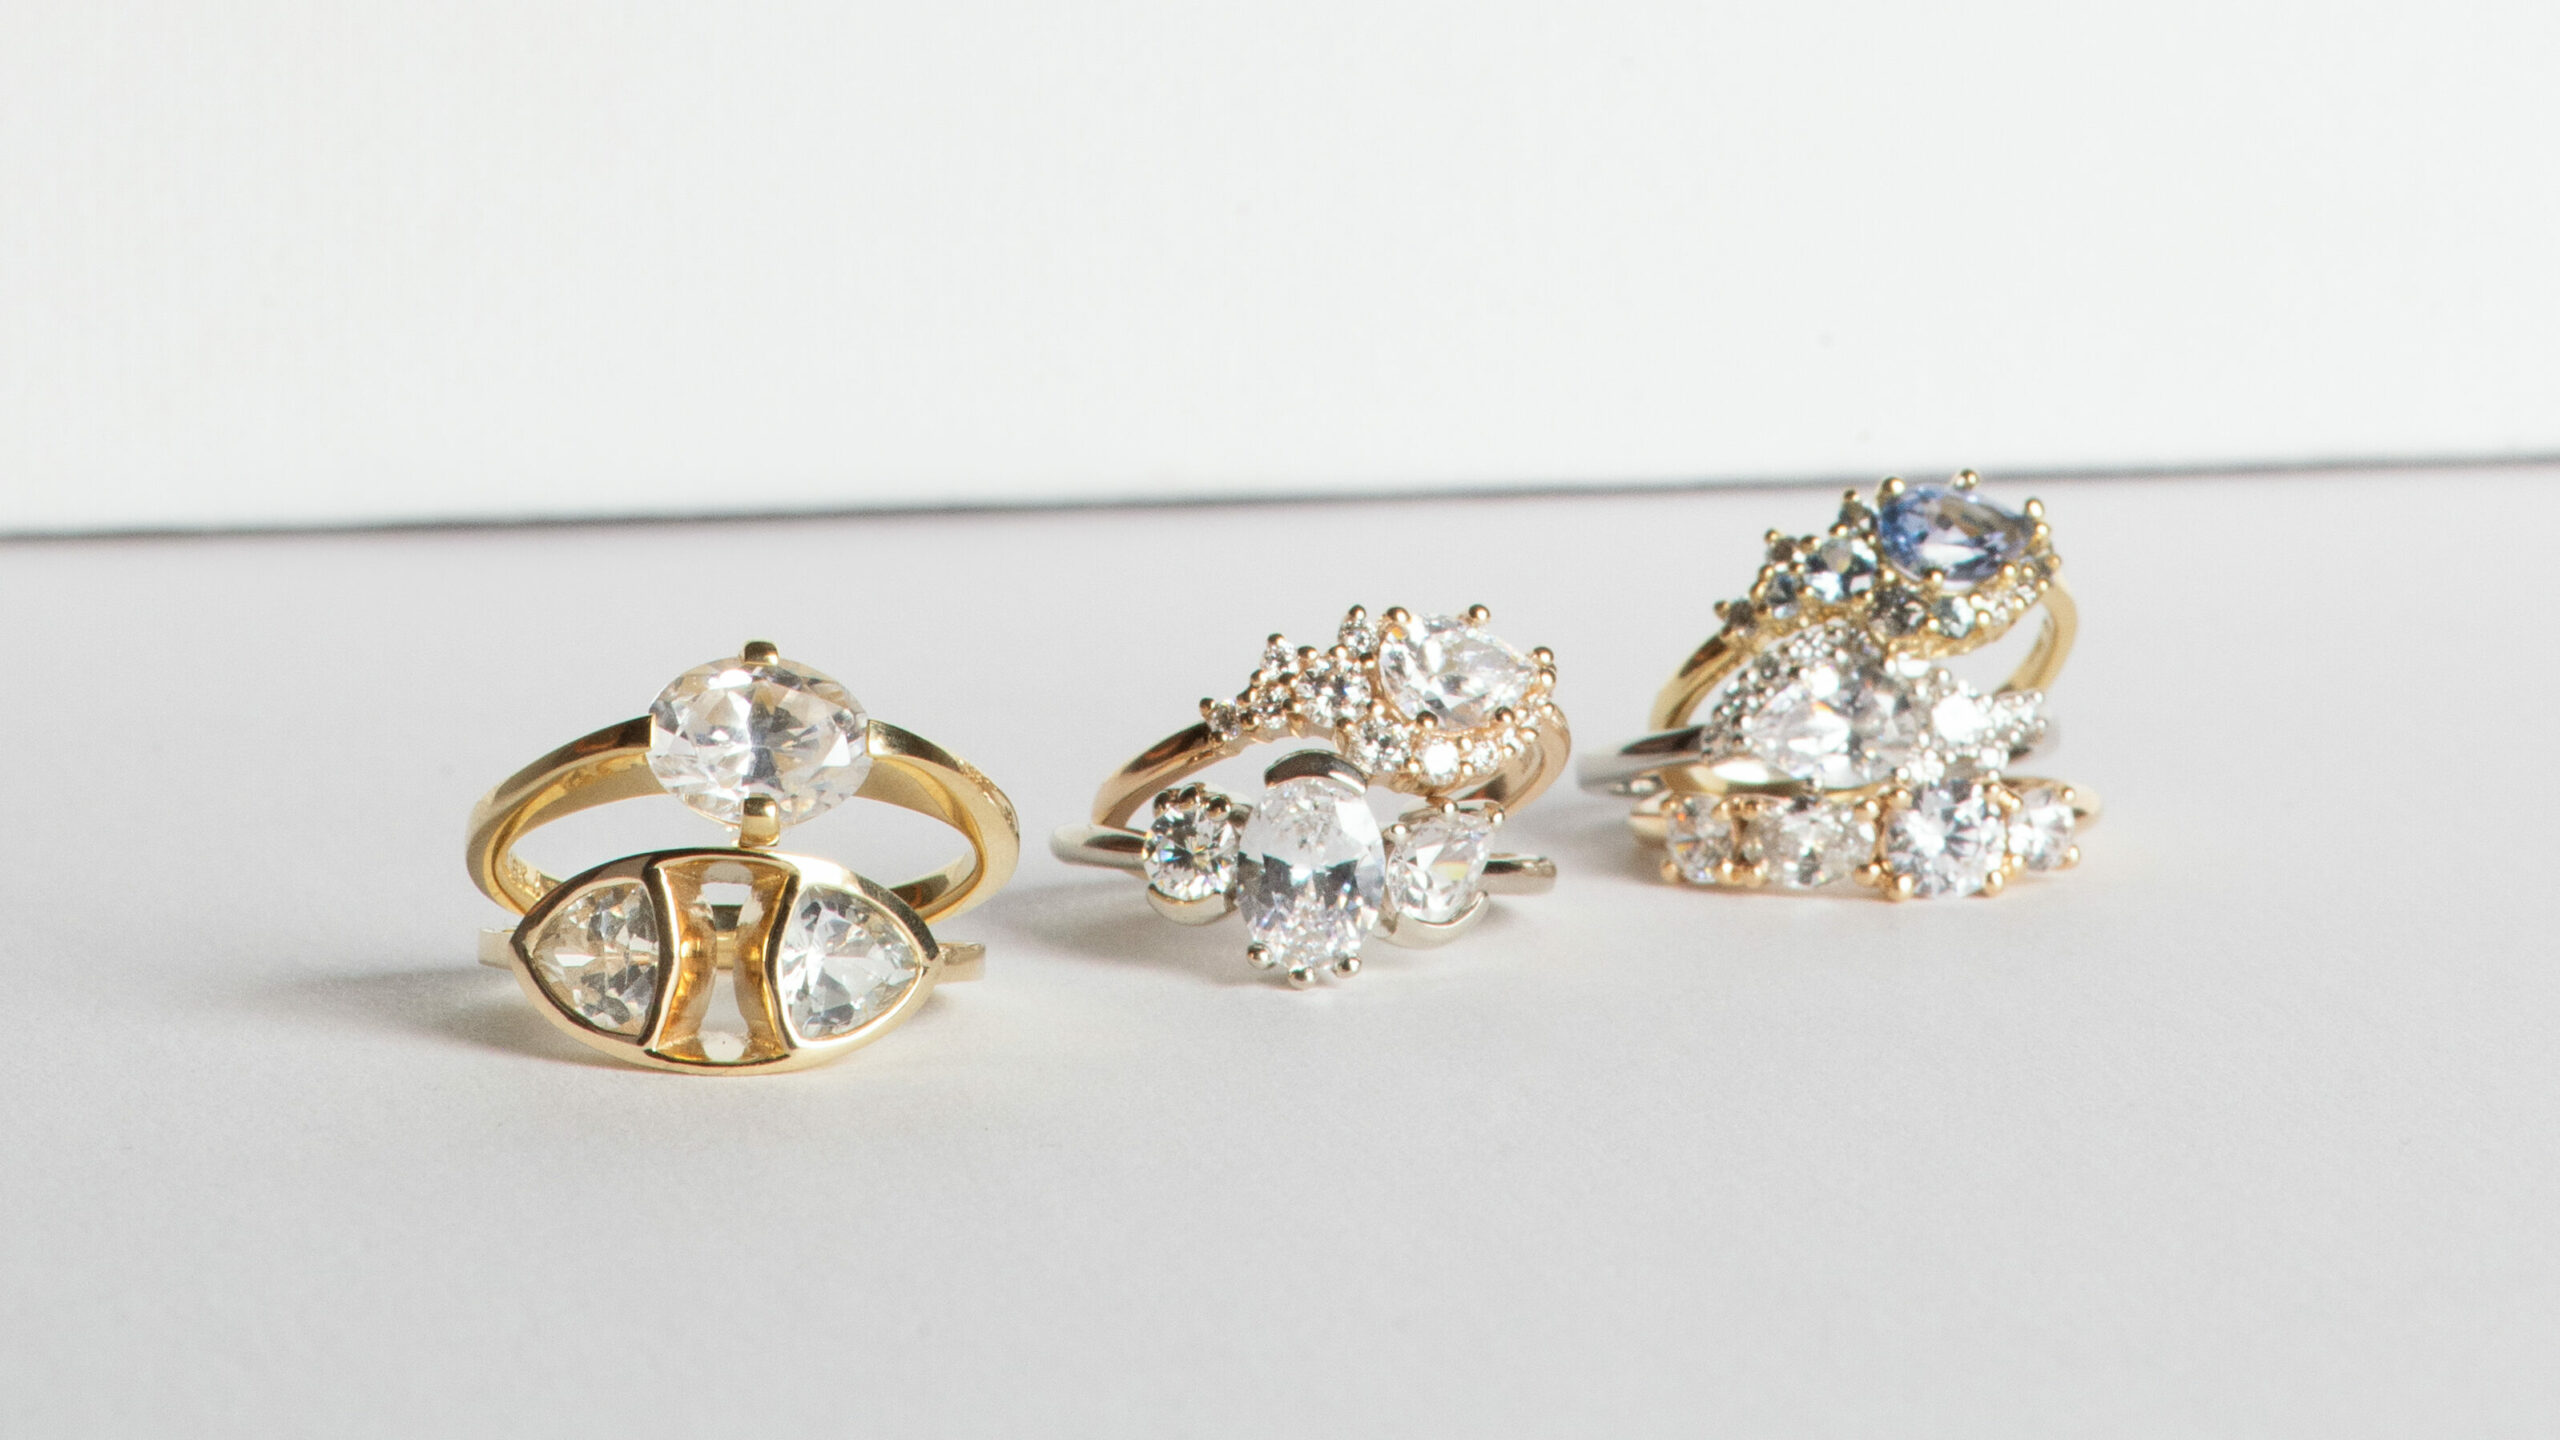 3 stacks of diamond and gemstone rings